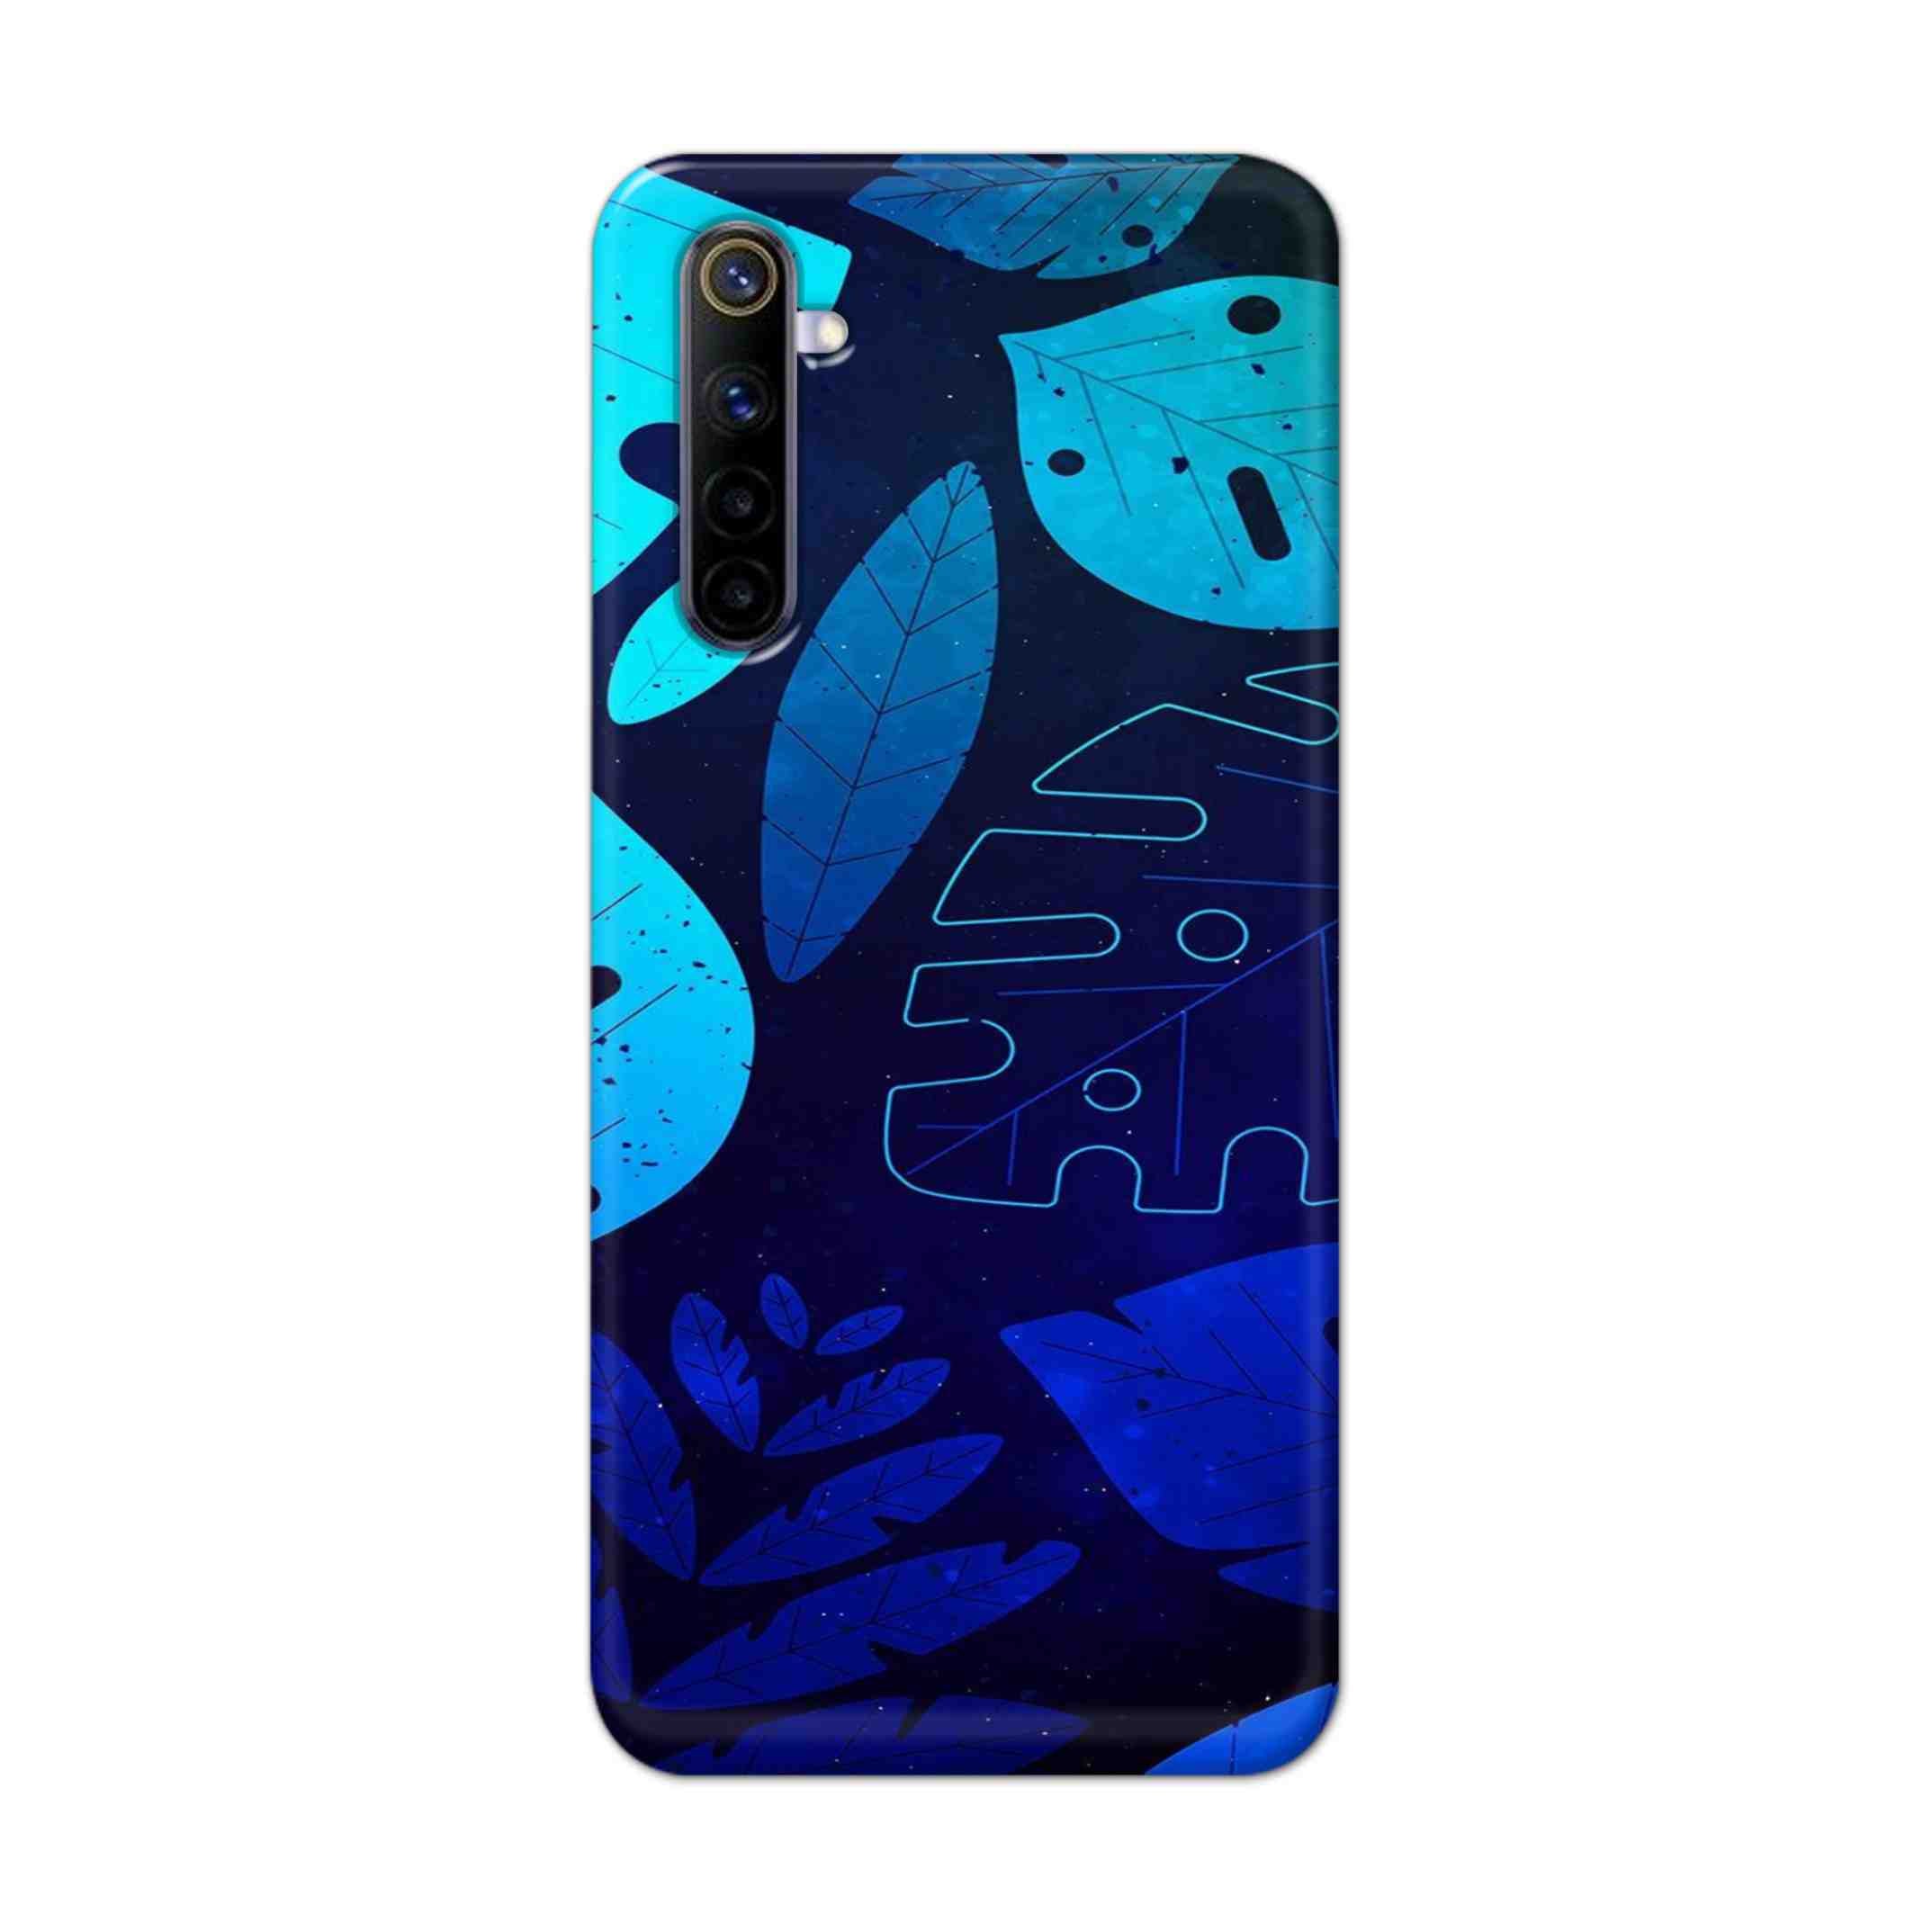 Buy Neon Leaf Hard Back Mobile Phone Case Cover For REALME 6 Online